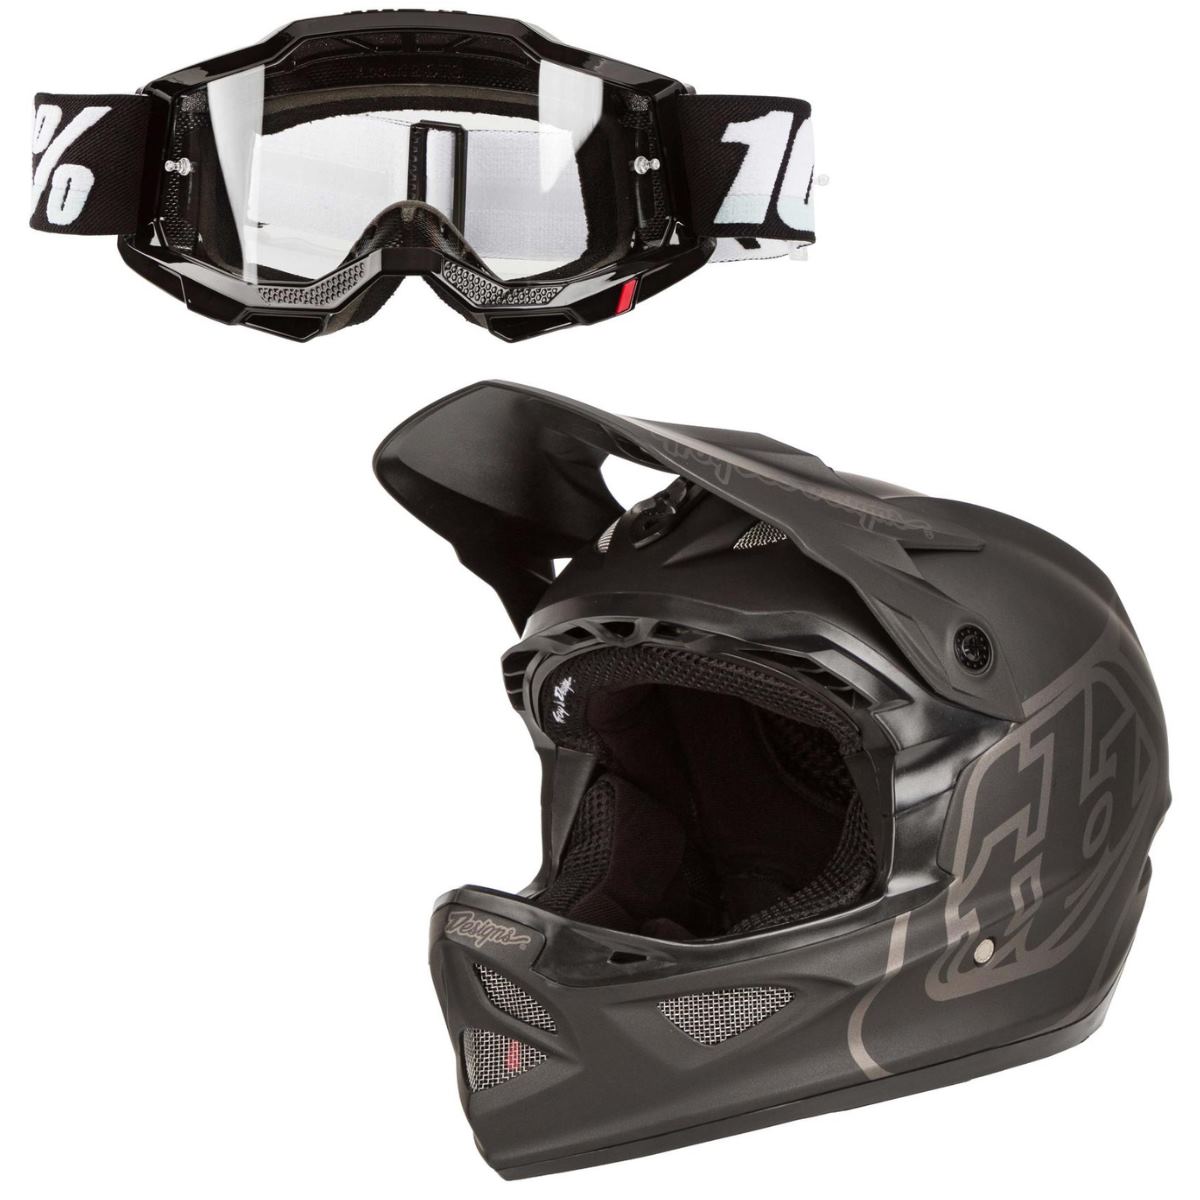 Troy Lee Designs Downhill Helm-Kit D3 Fiberlite / Accuri Gen. 2 OTG Set: 2-teilig, Schwarz